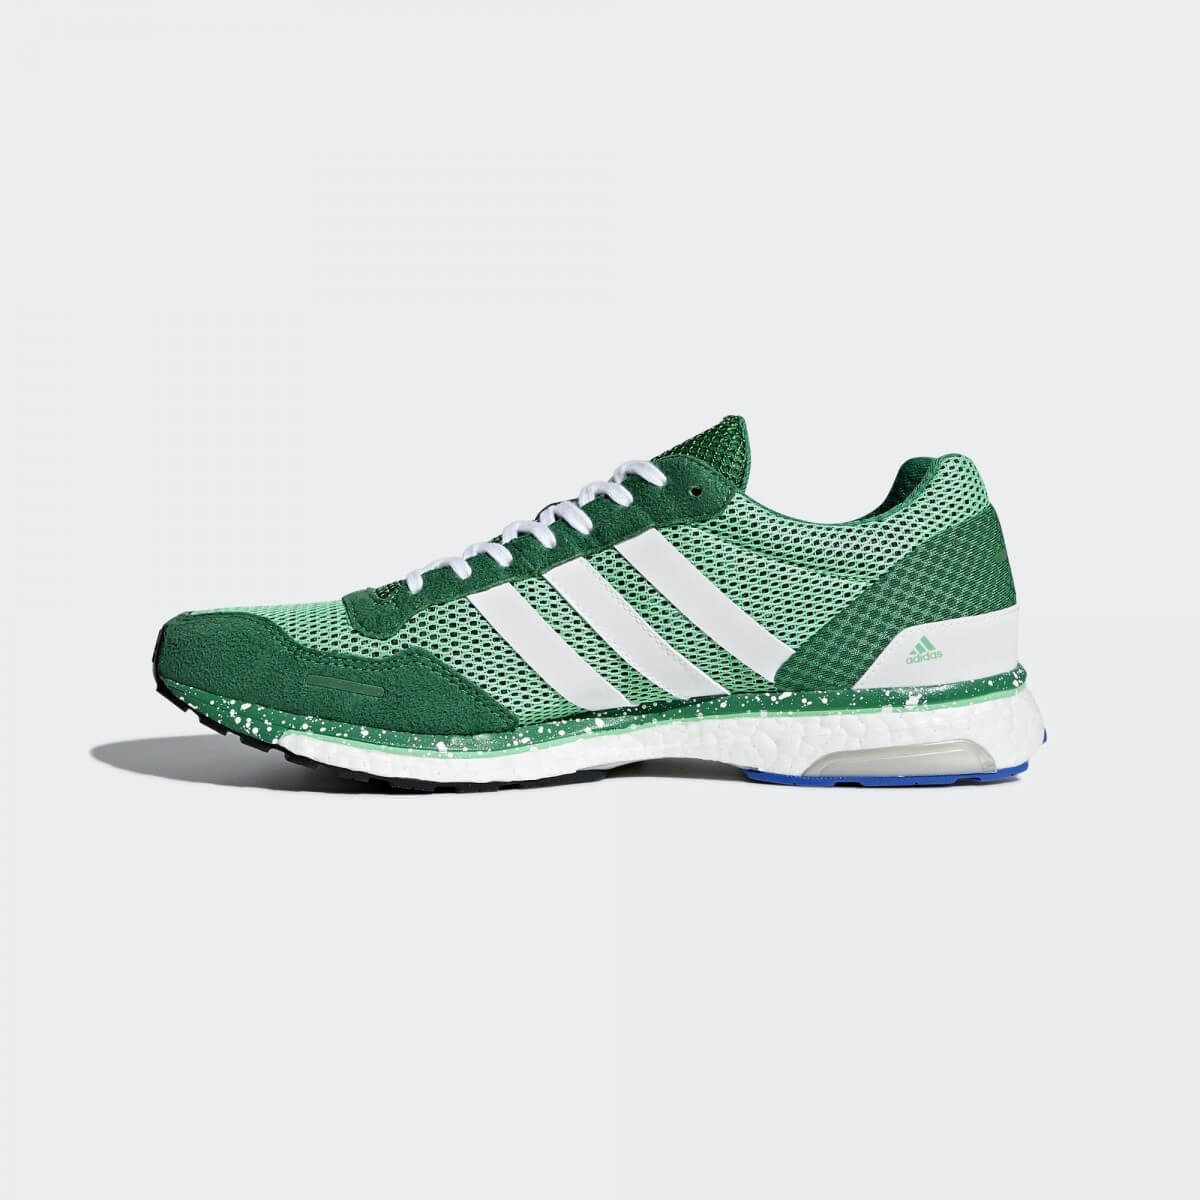 Adidas Adizero 3 Men's Shoes Green 365Rider